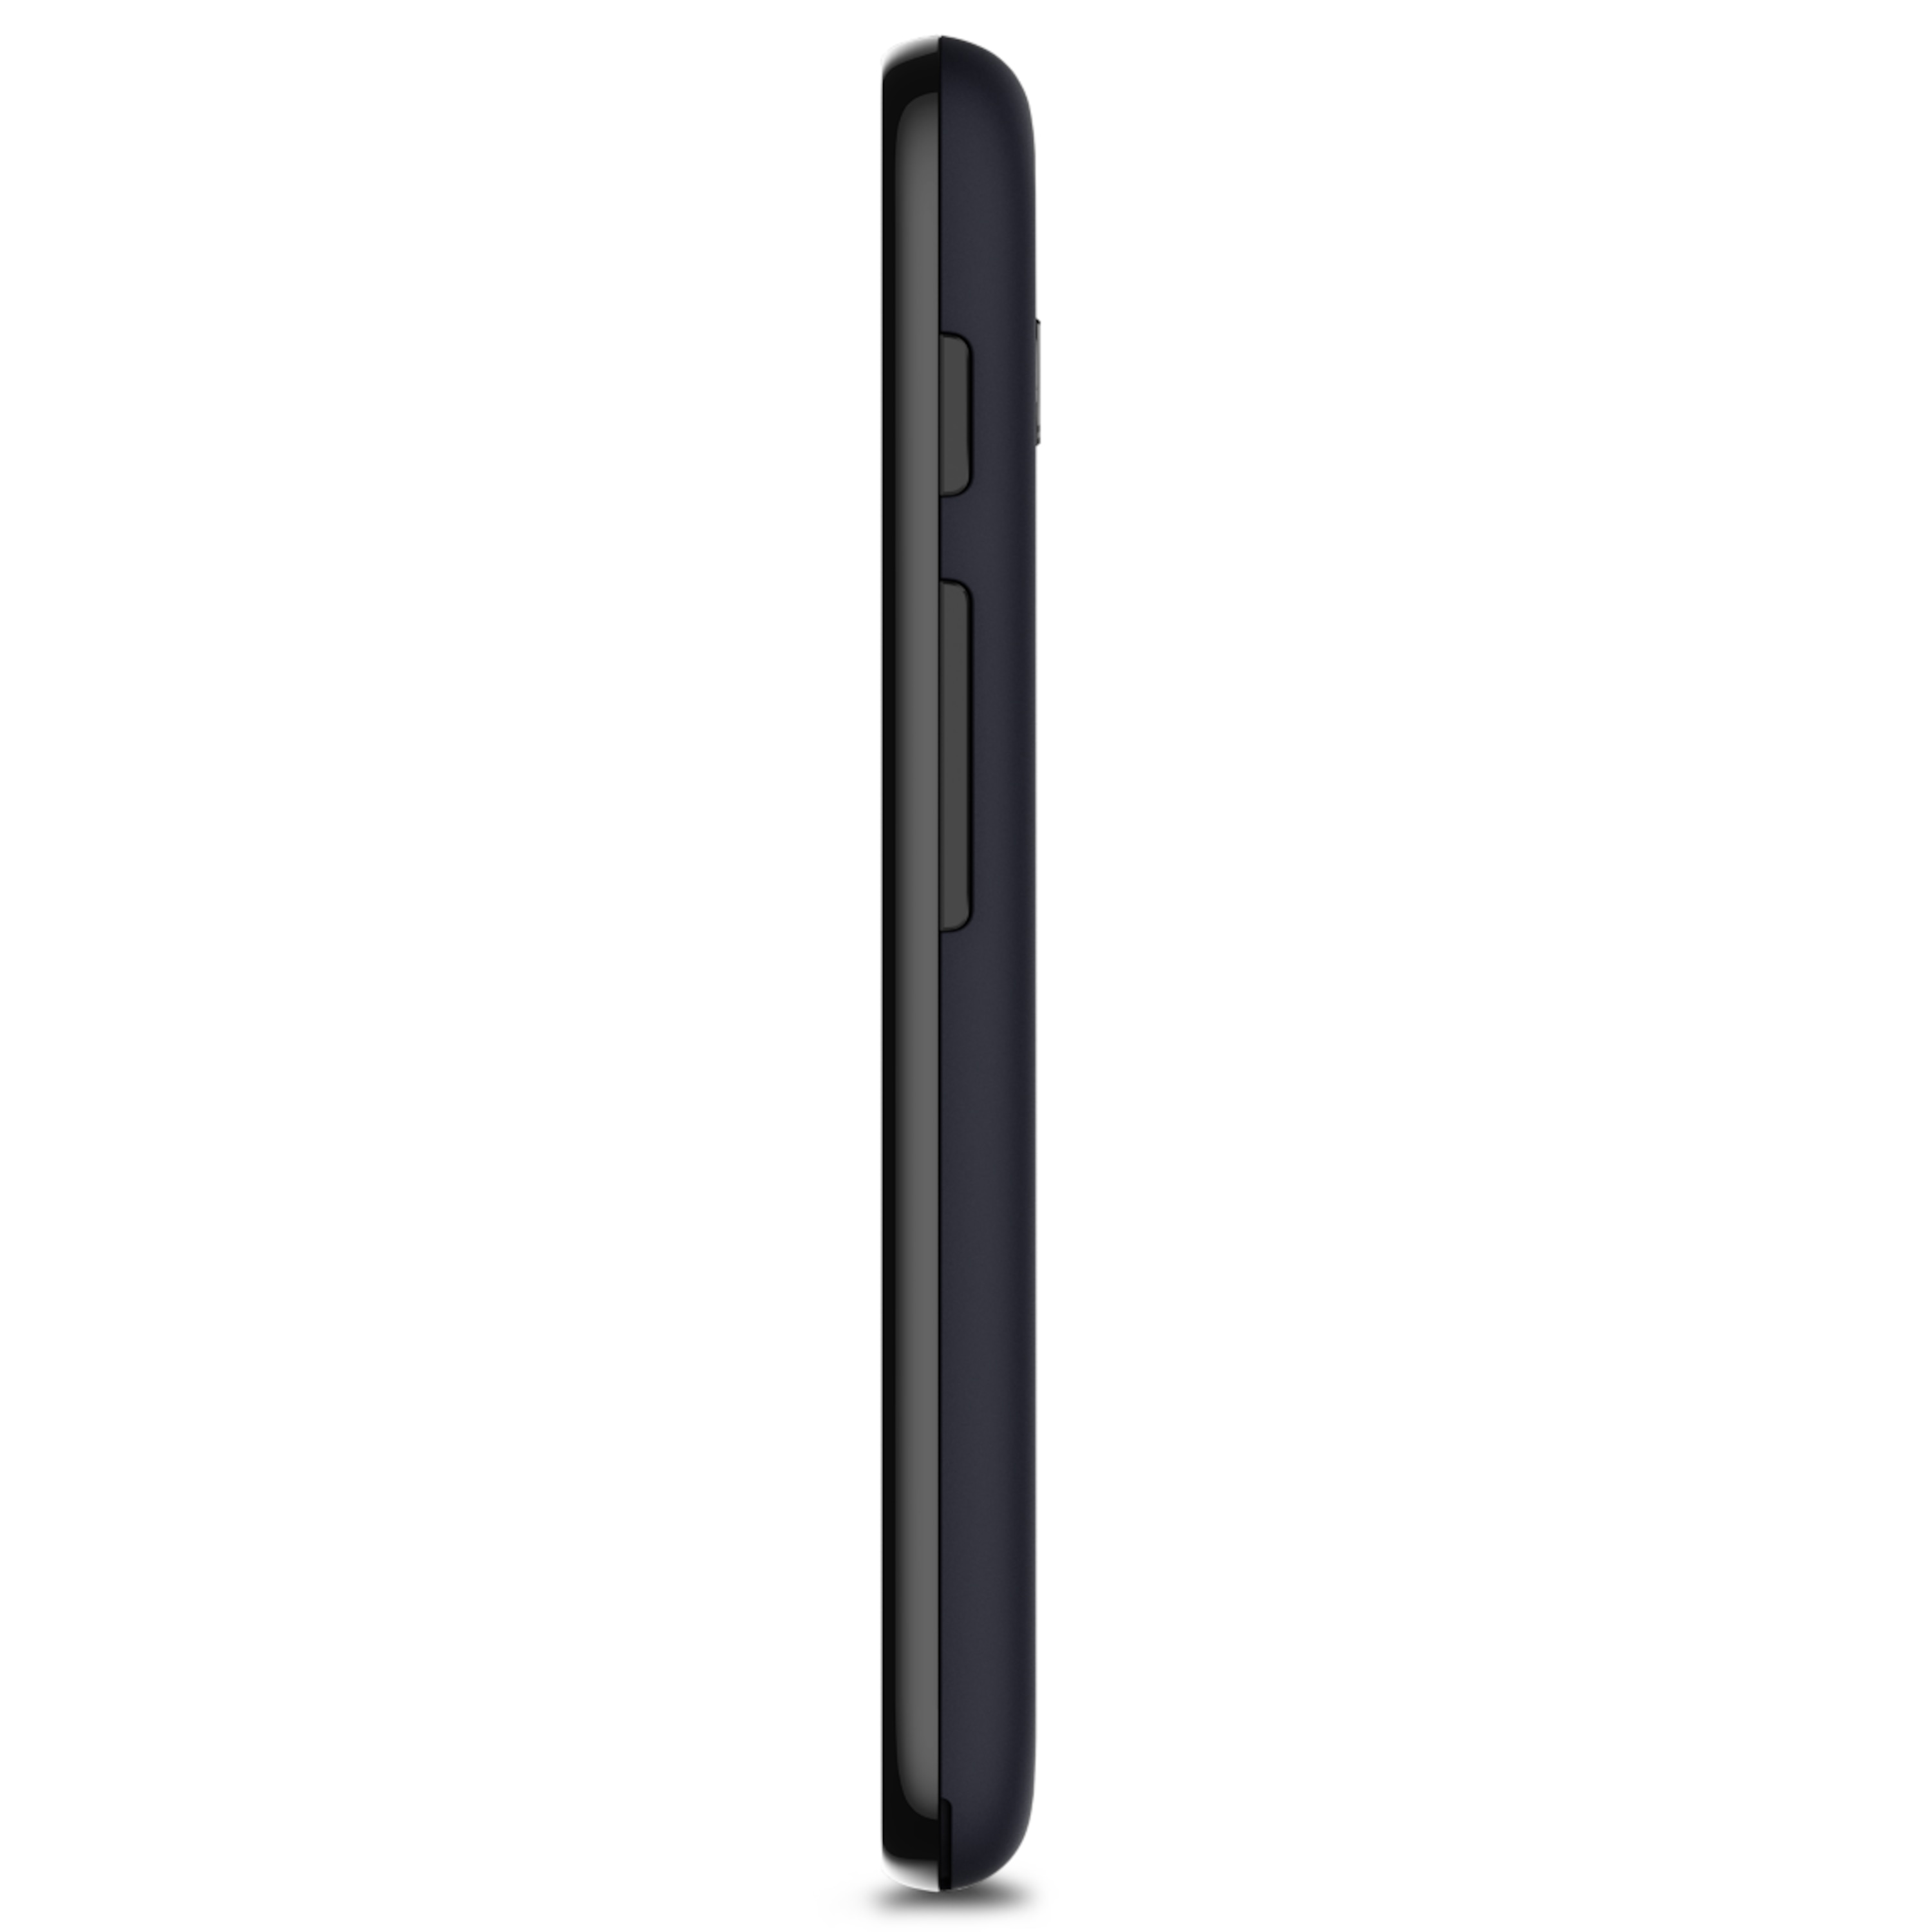 ALCATEL Pixi 4 4034D Smartphone, 10,16 cm (4'') Display, Android™ 6.0, 4 GB Speicher, Quad-Core-Prozessor